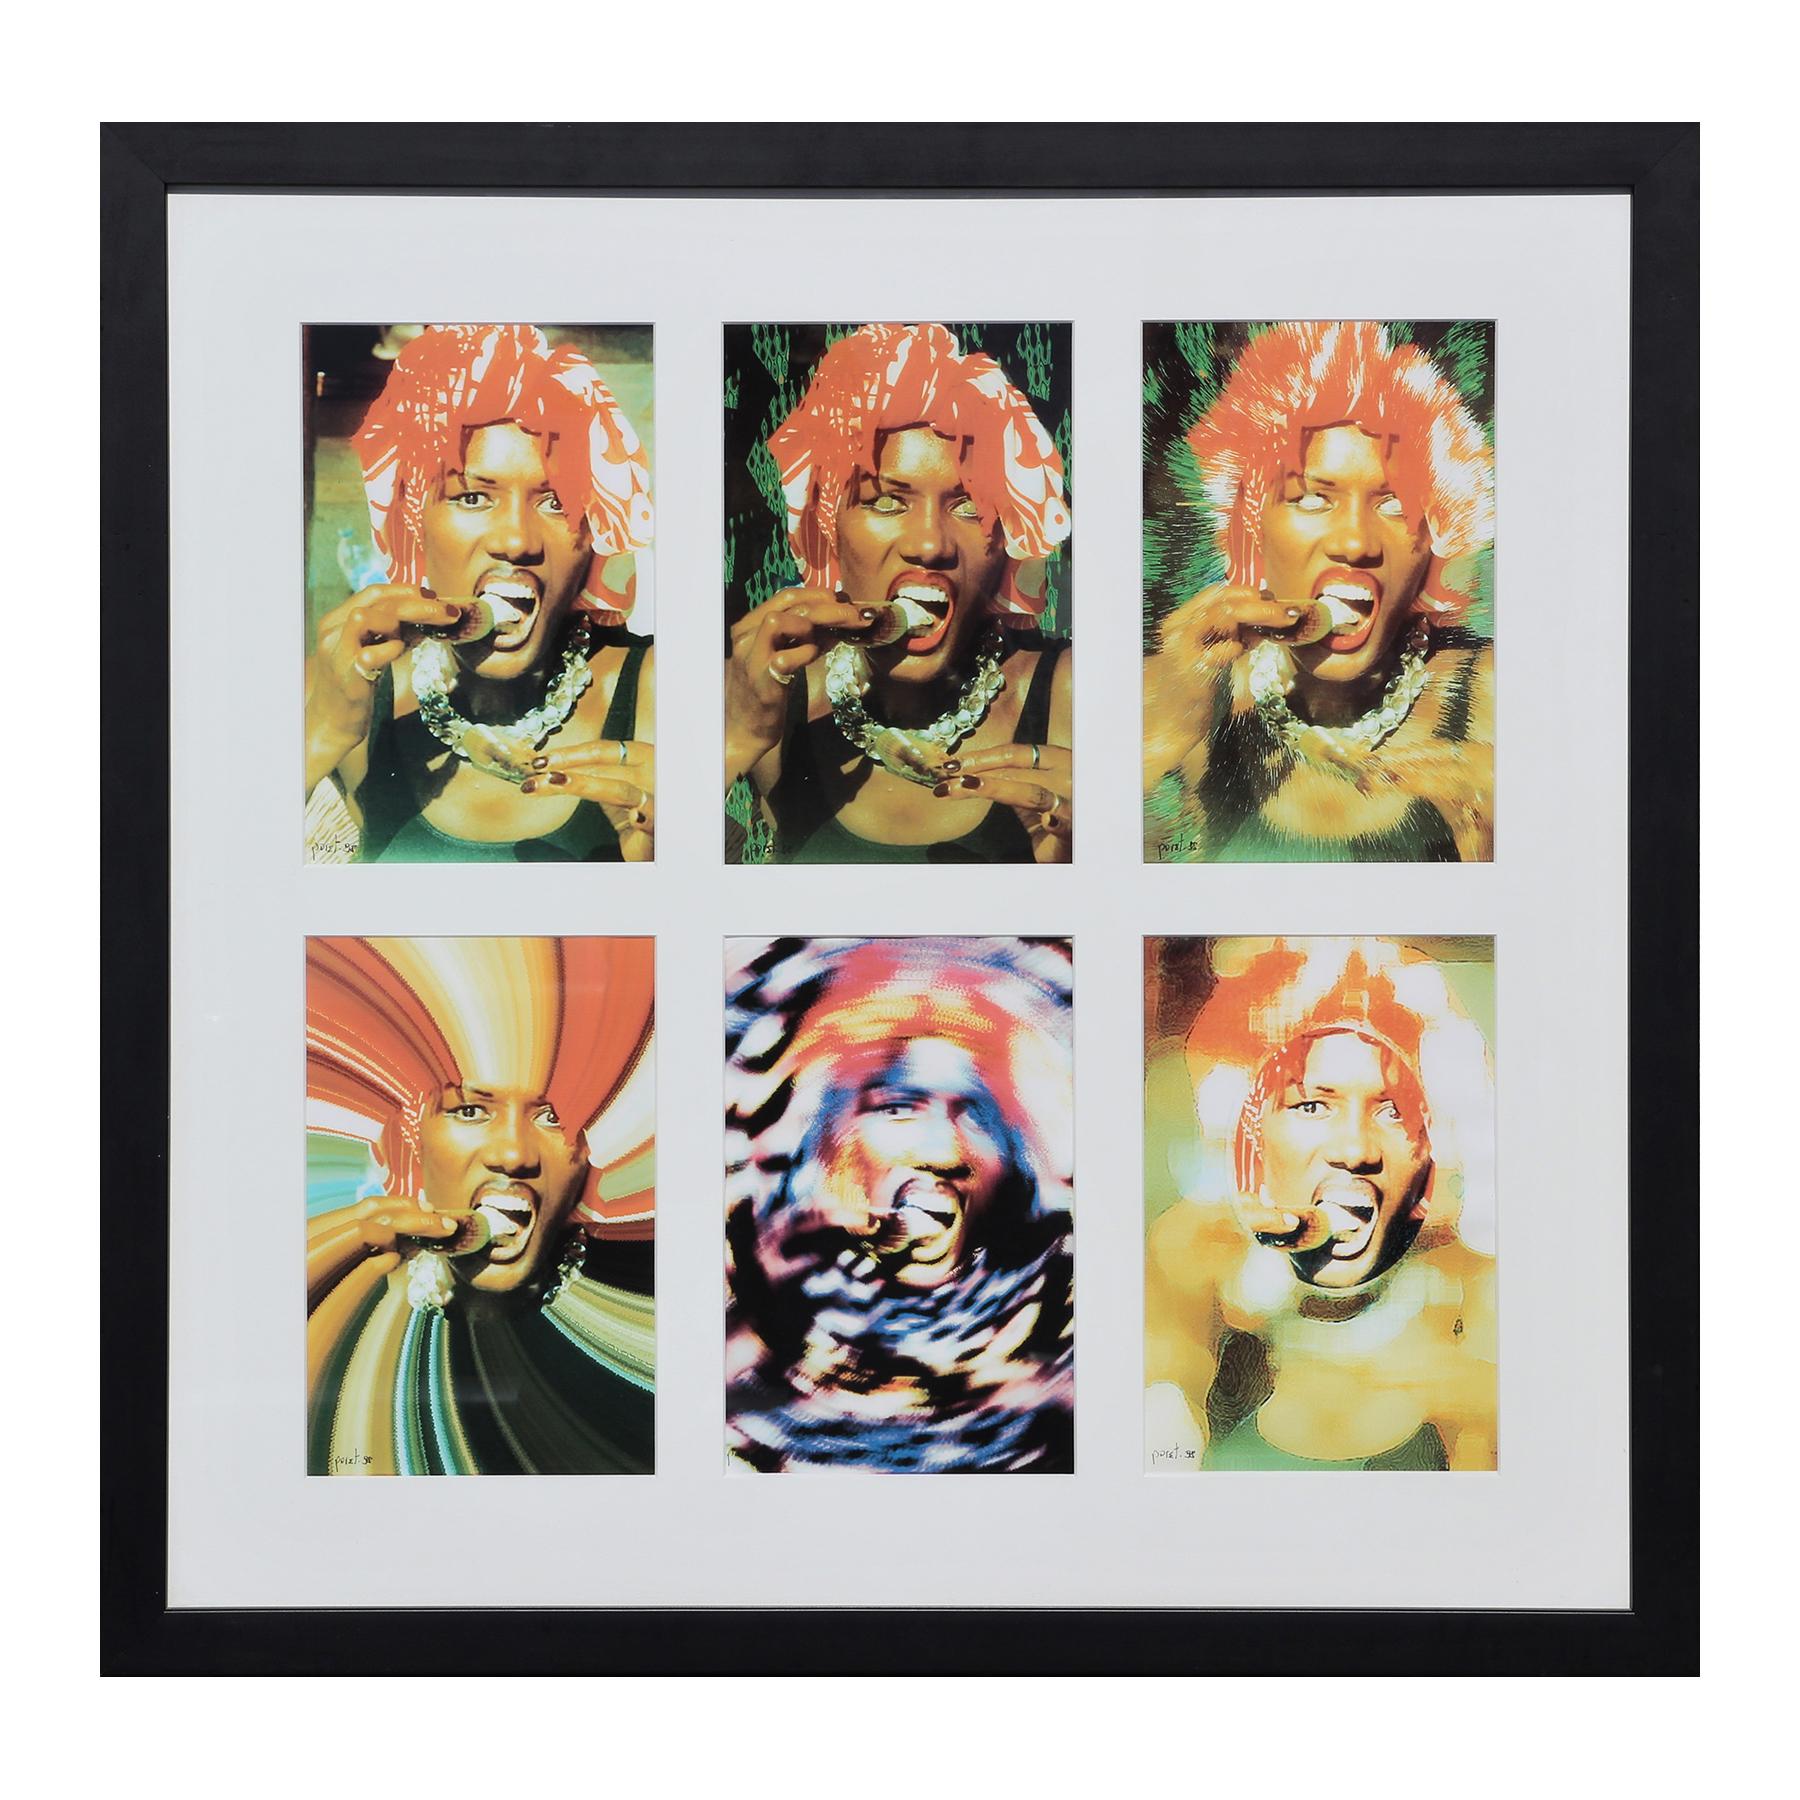 “Grace Jones 2” Six Green and Orange Photographs Portraits on a Grid - Print by Pierre Poretti